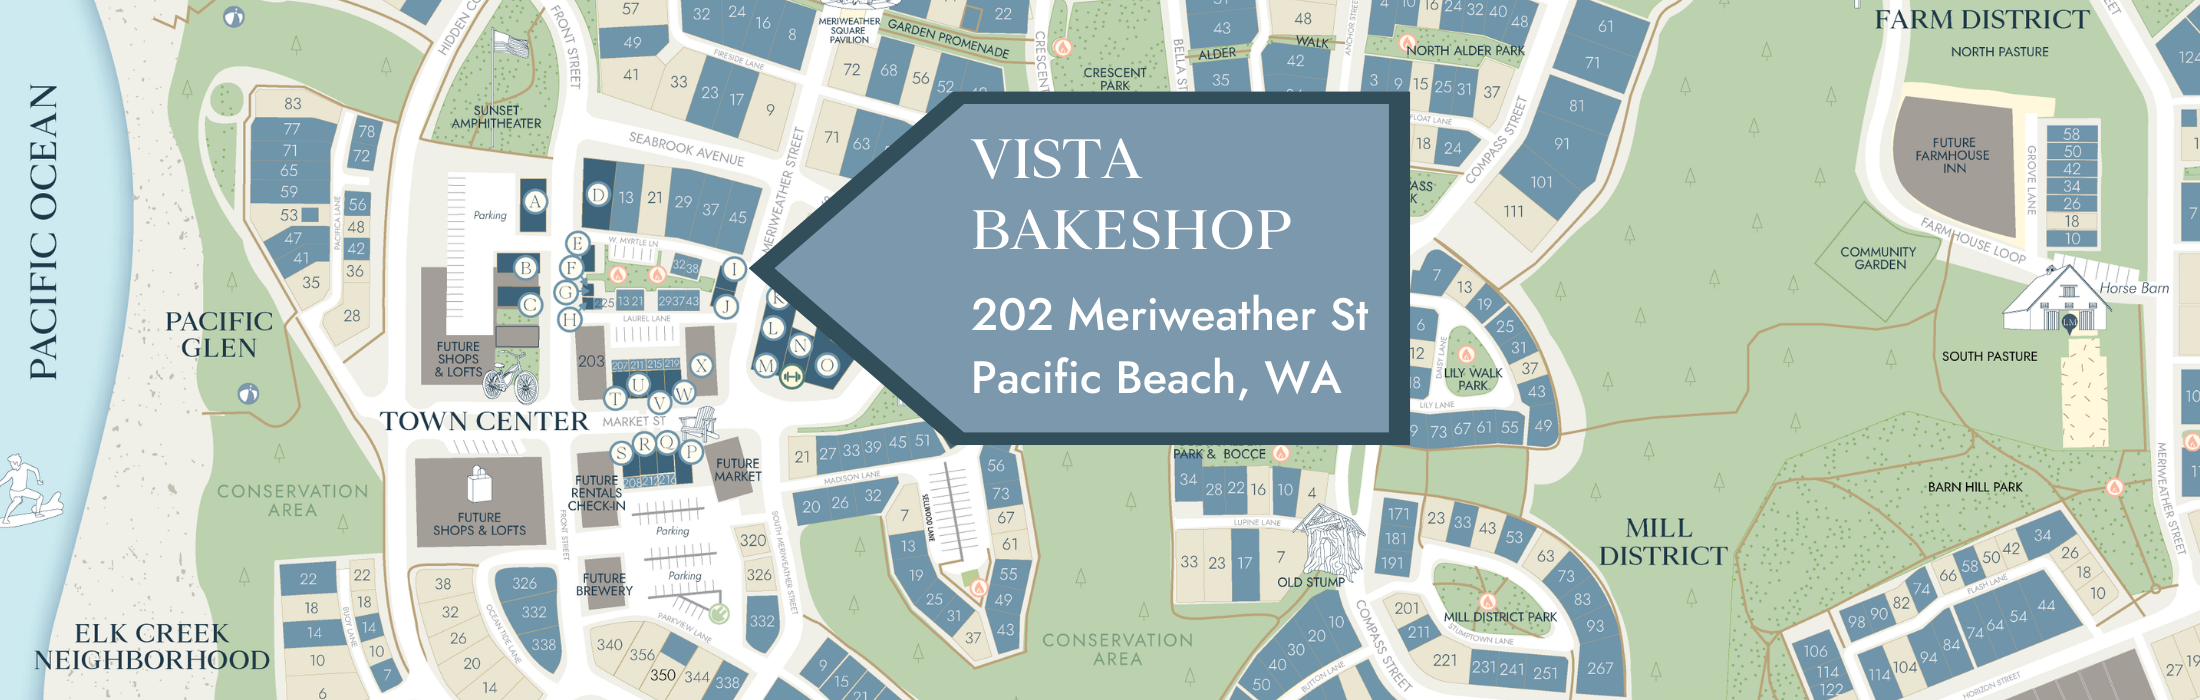 Vista Bakeshop's Location In Seabrook